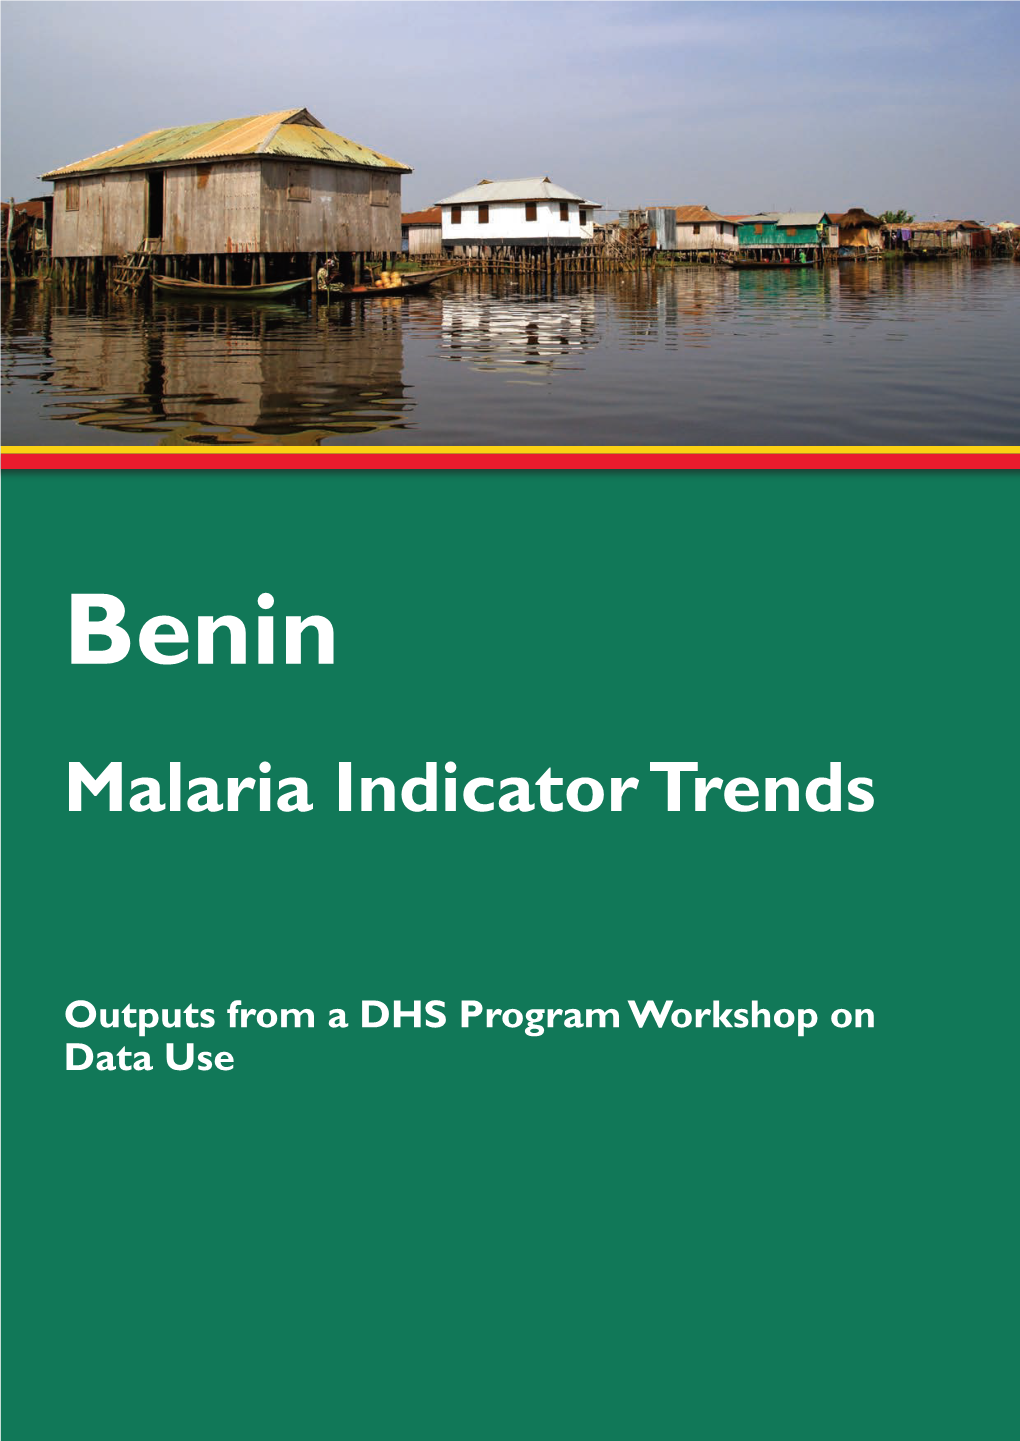 Benin Malaria Indicator Trends